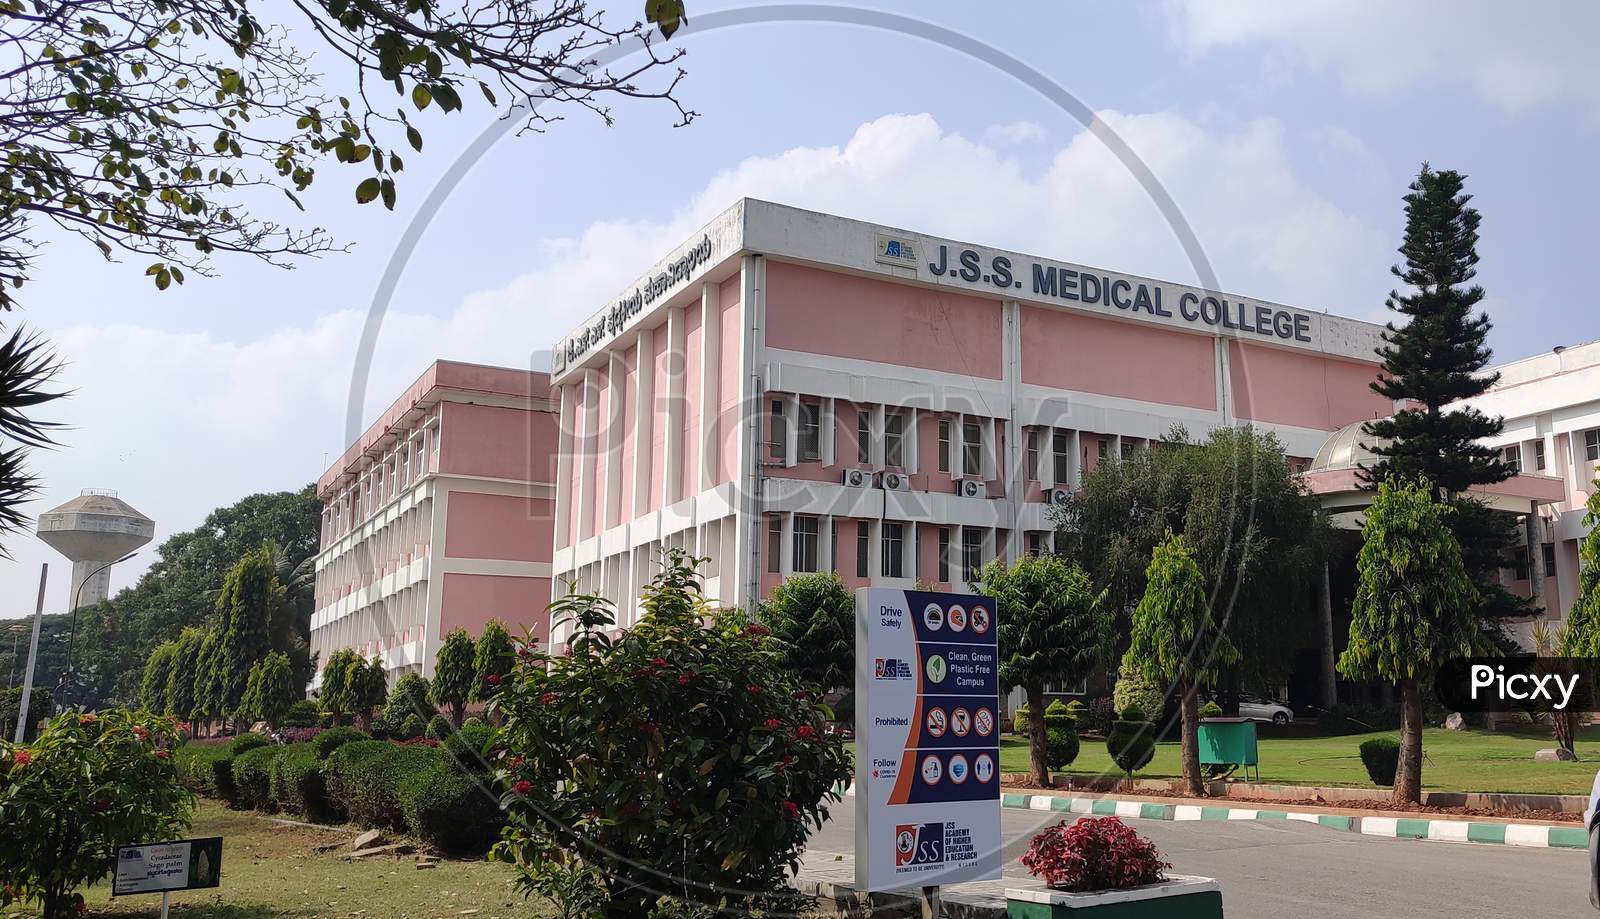 Jss Medical college, Mysore (Karnataka, India)